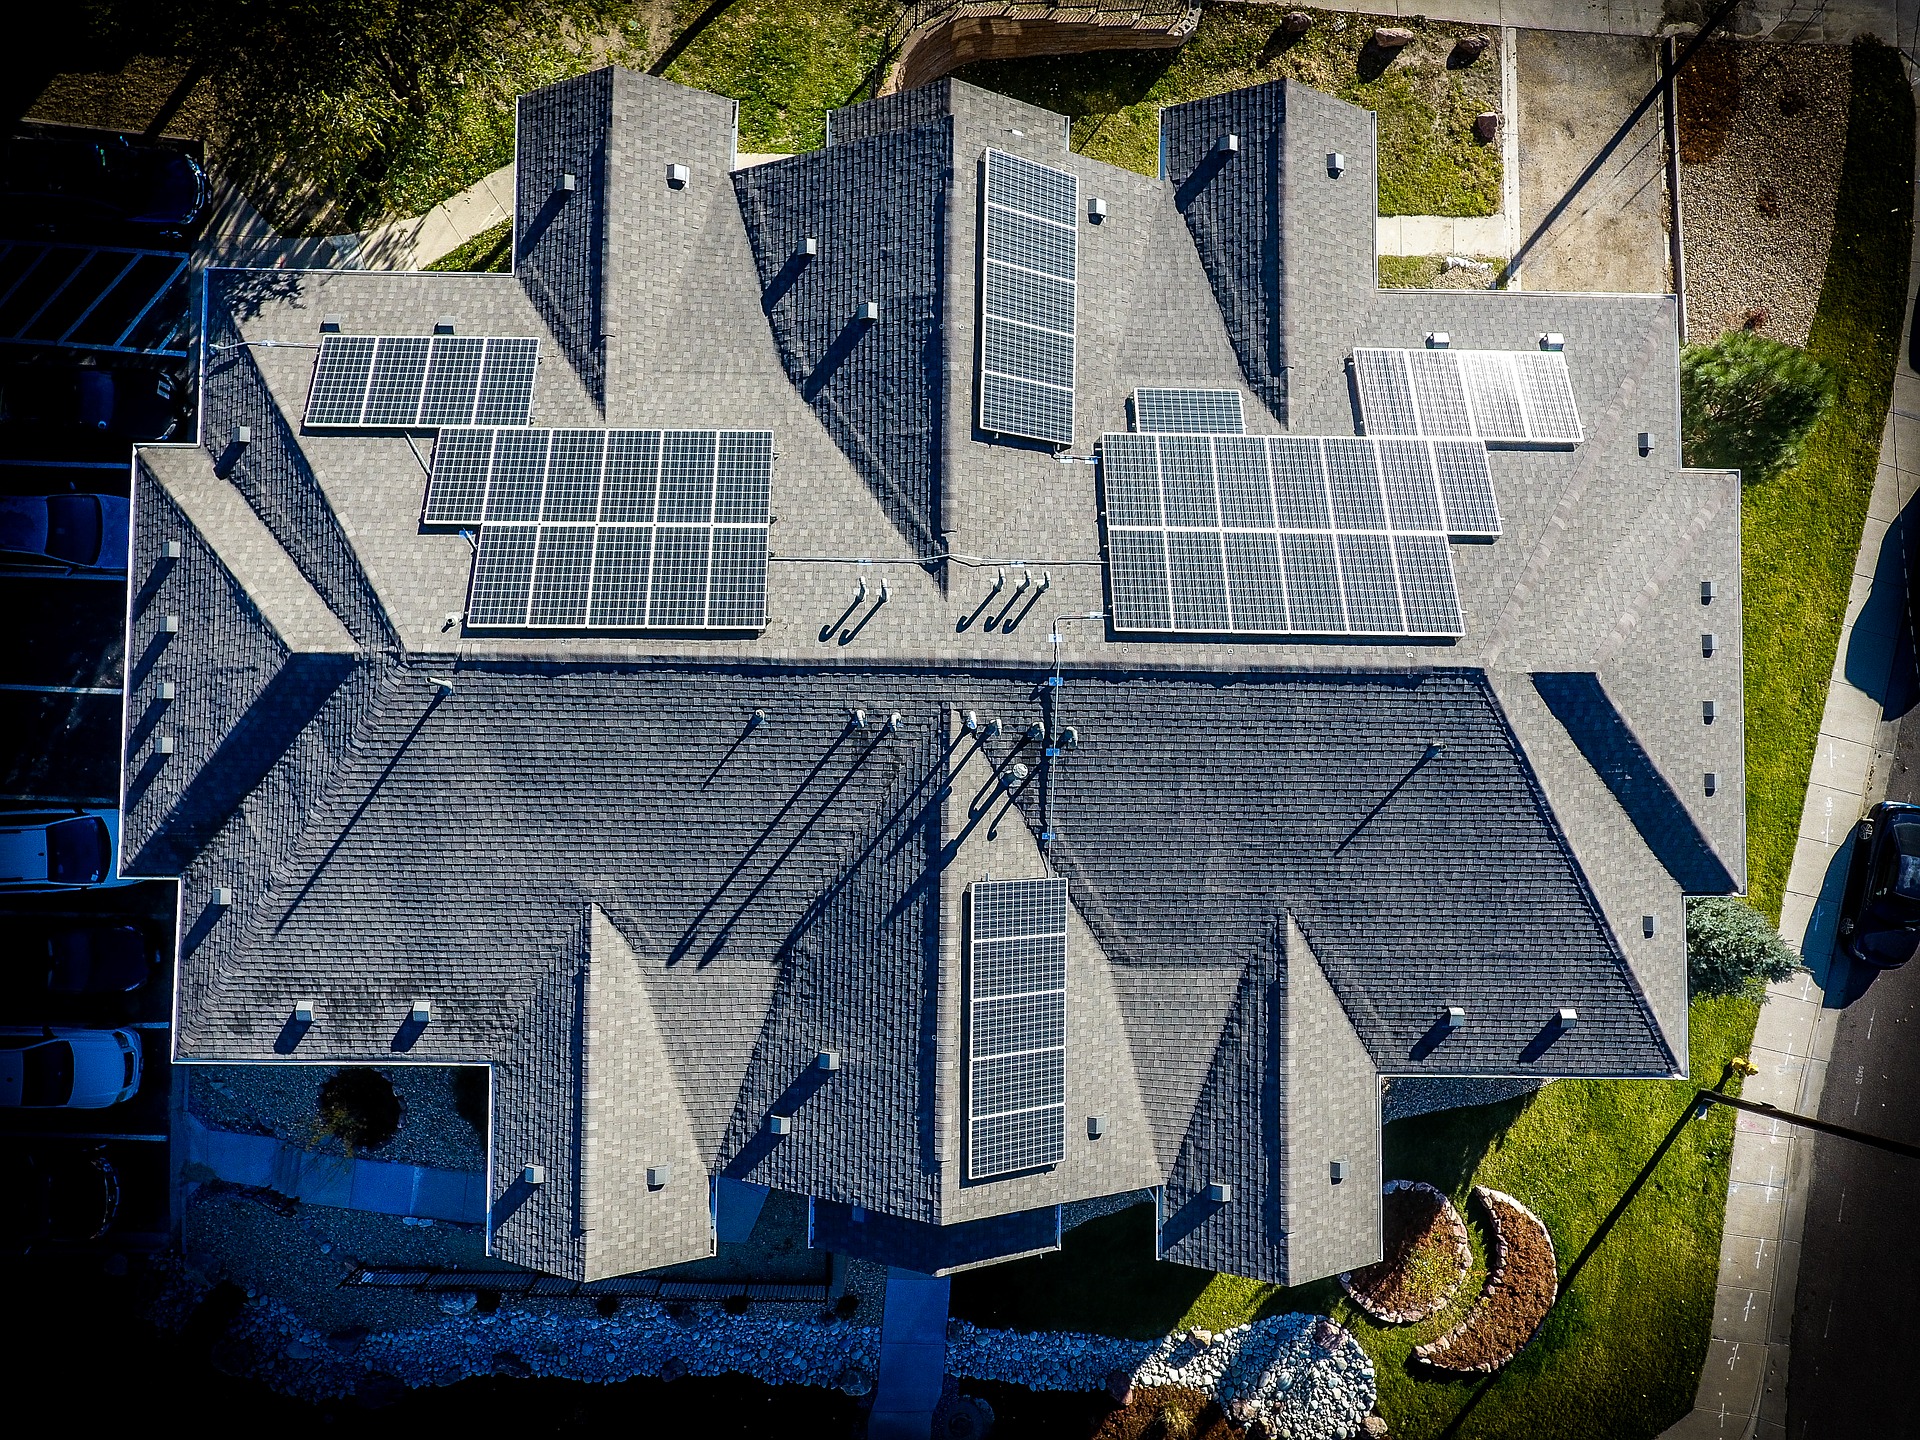 Solar Company in California Chooses TAB Bank for a $2.5 Million Revolving Credit Facility